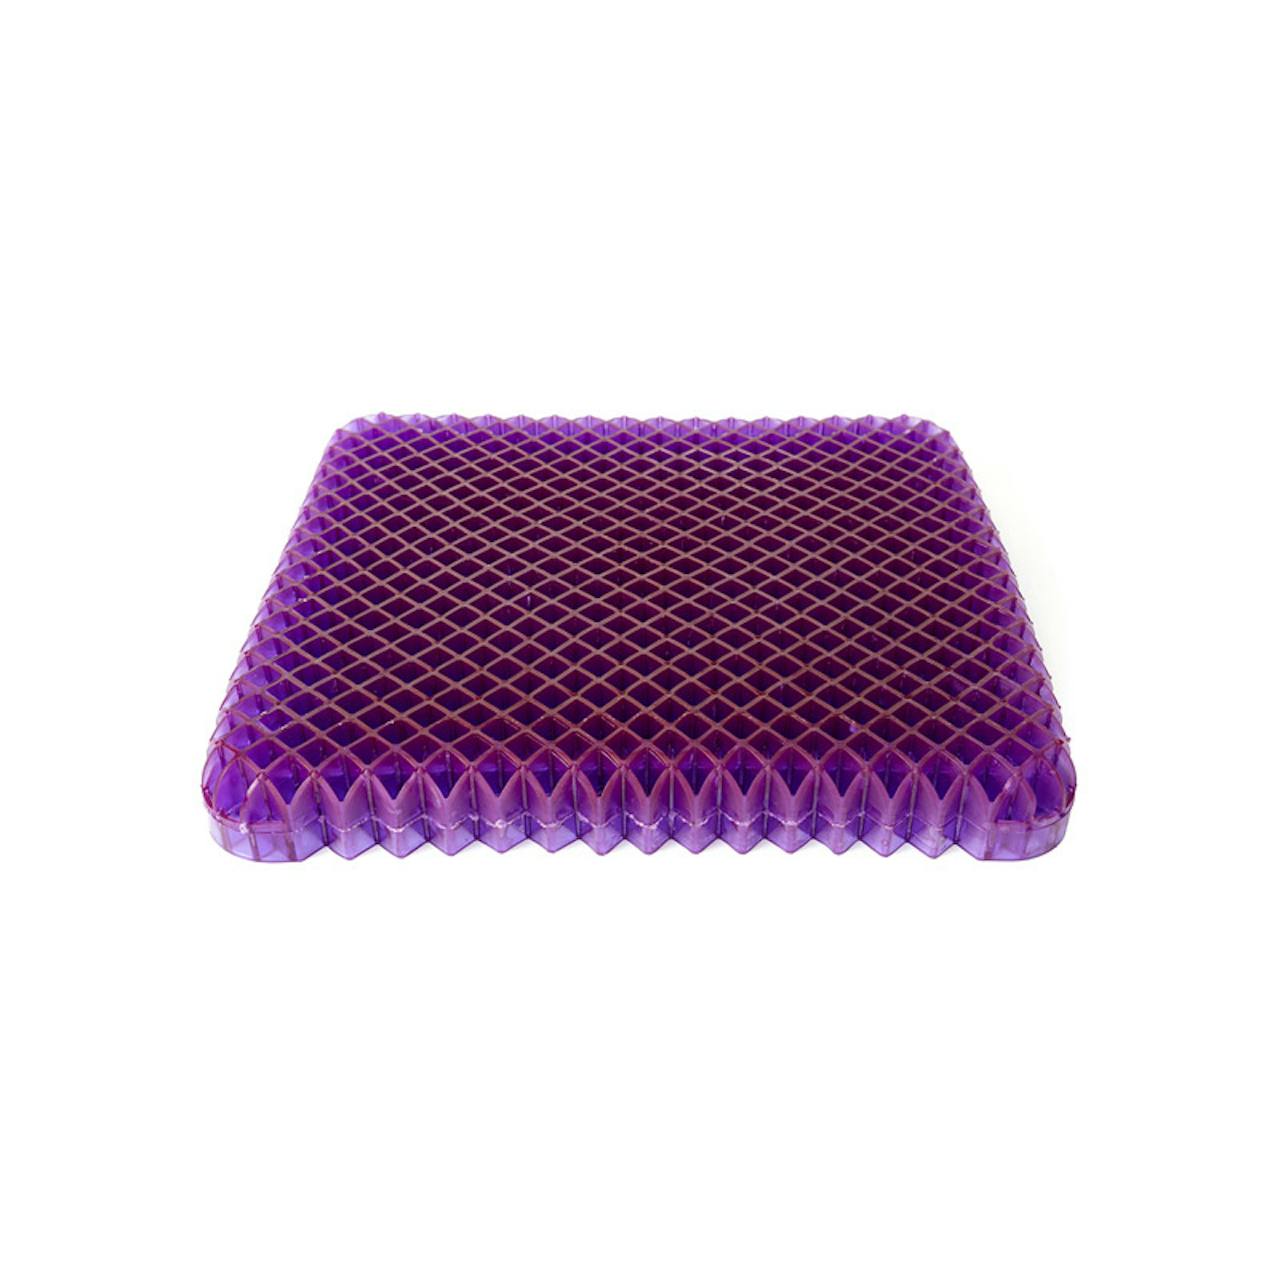 https://raneys-cdn11.imgix.net/images/stencil/original/products/201569/144050/Purple-Royal-Seat-Cushion-DASPSCRYL01__76047.1571172176.jpg?auto=compress,format&w=1280